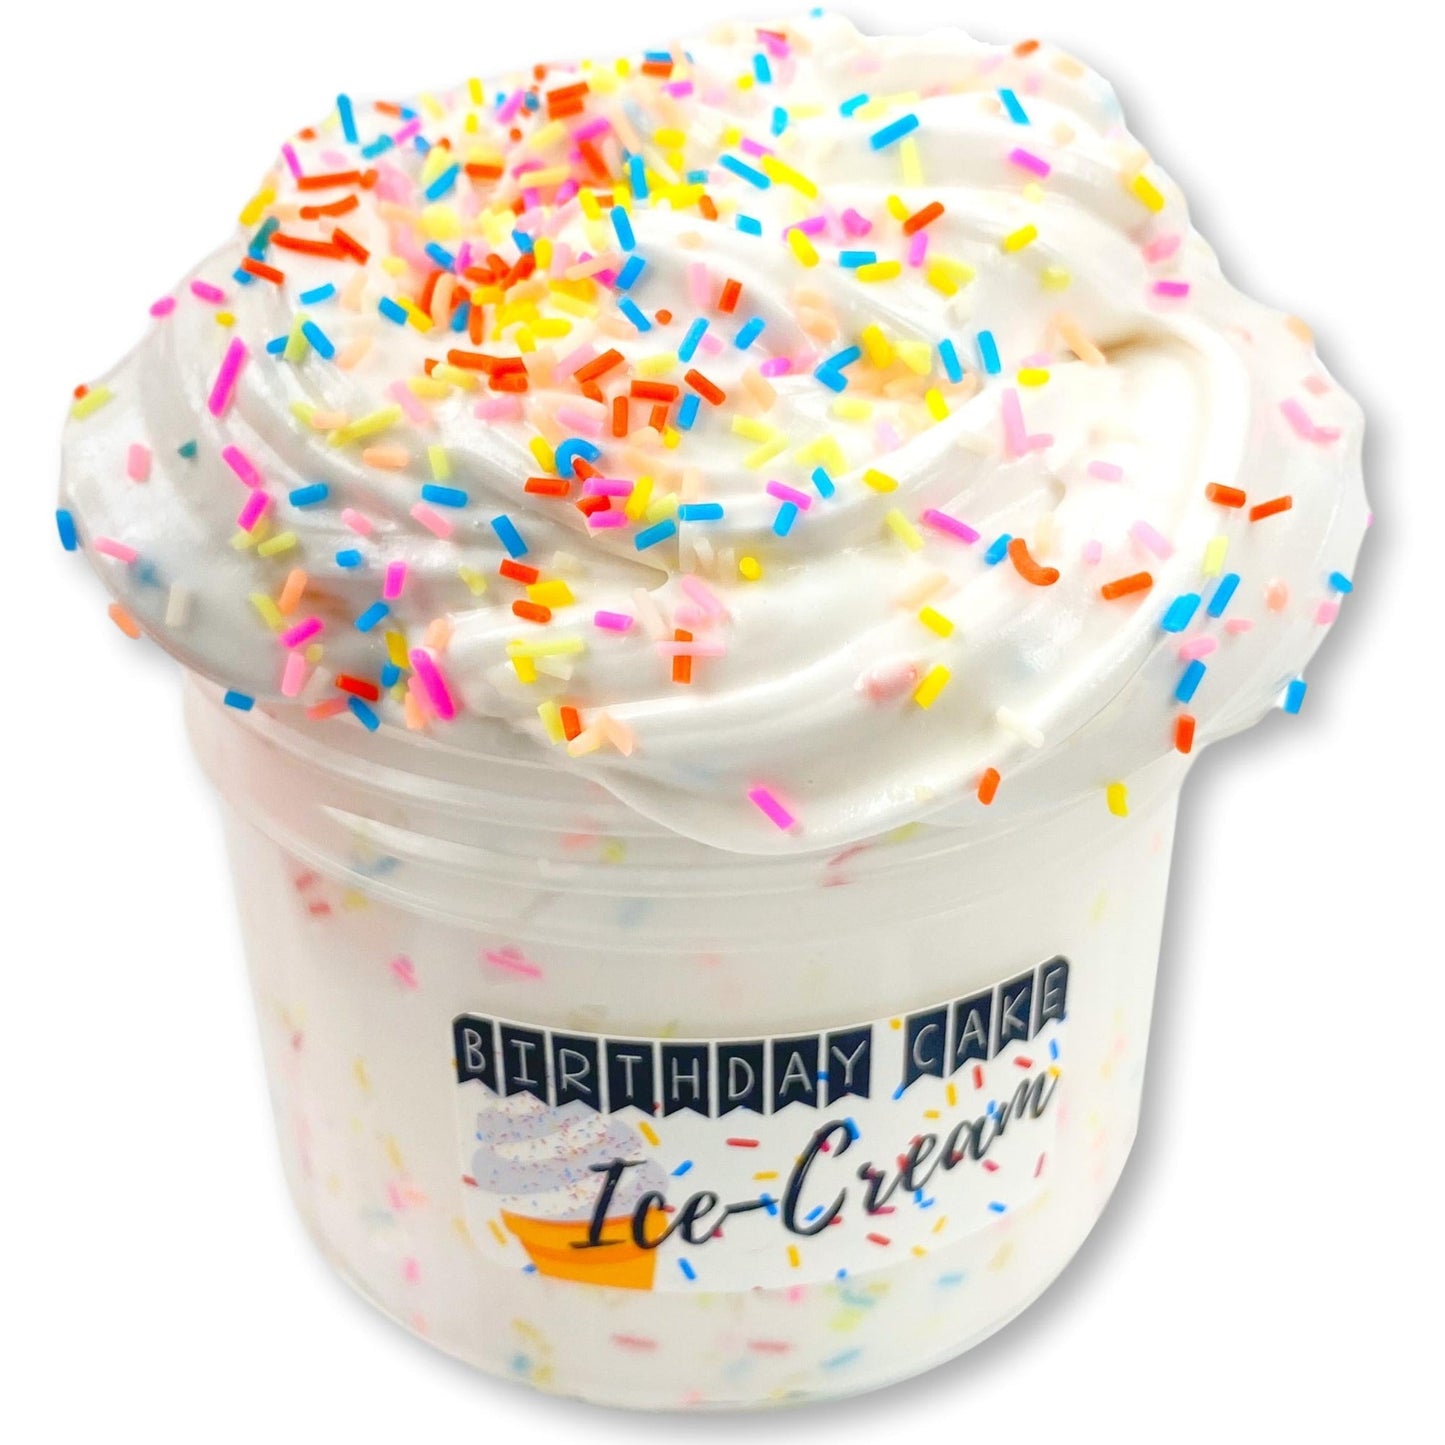 【Buy 2 Get 1 Free】BIRTHDAY CAKE ICE CREAM SLIME